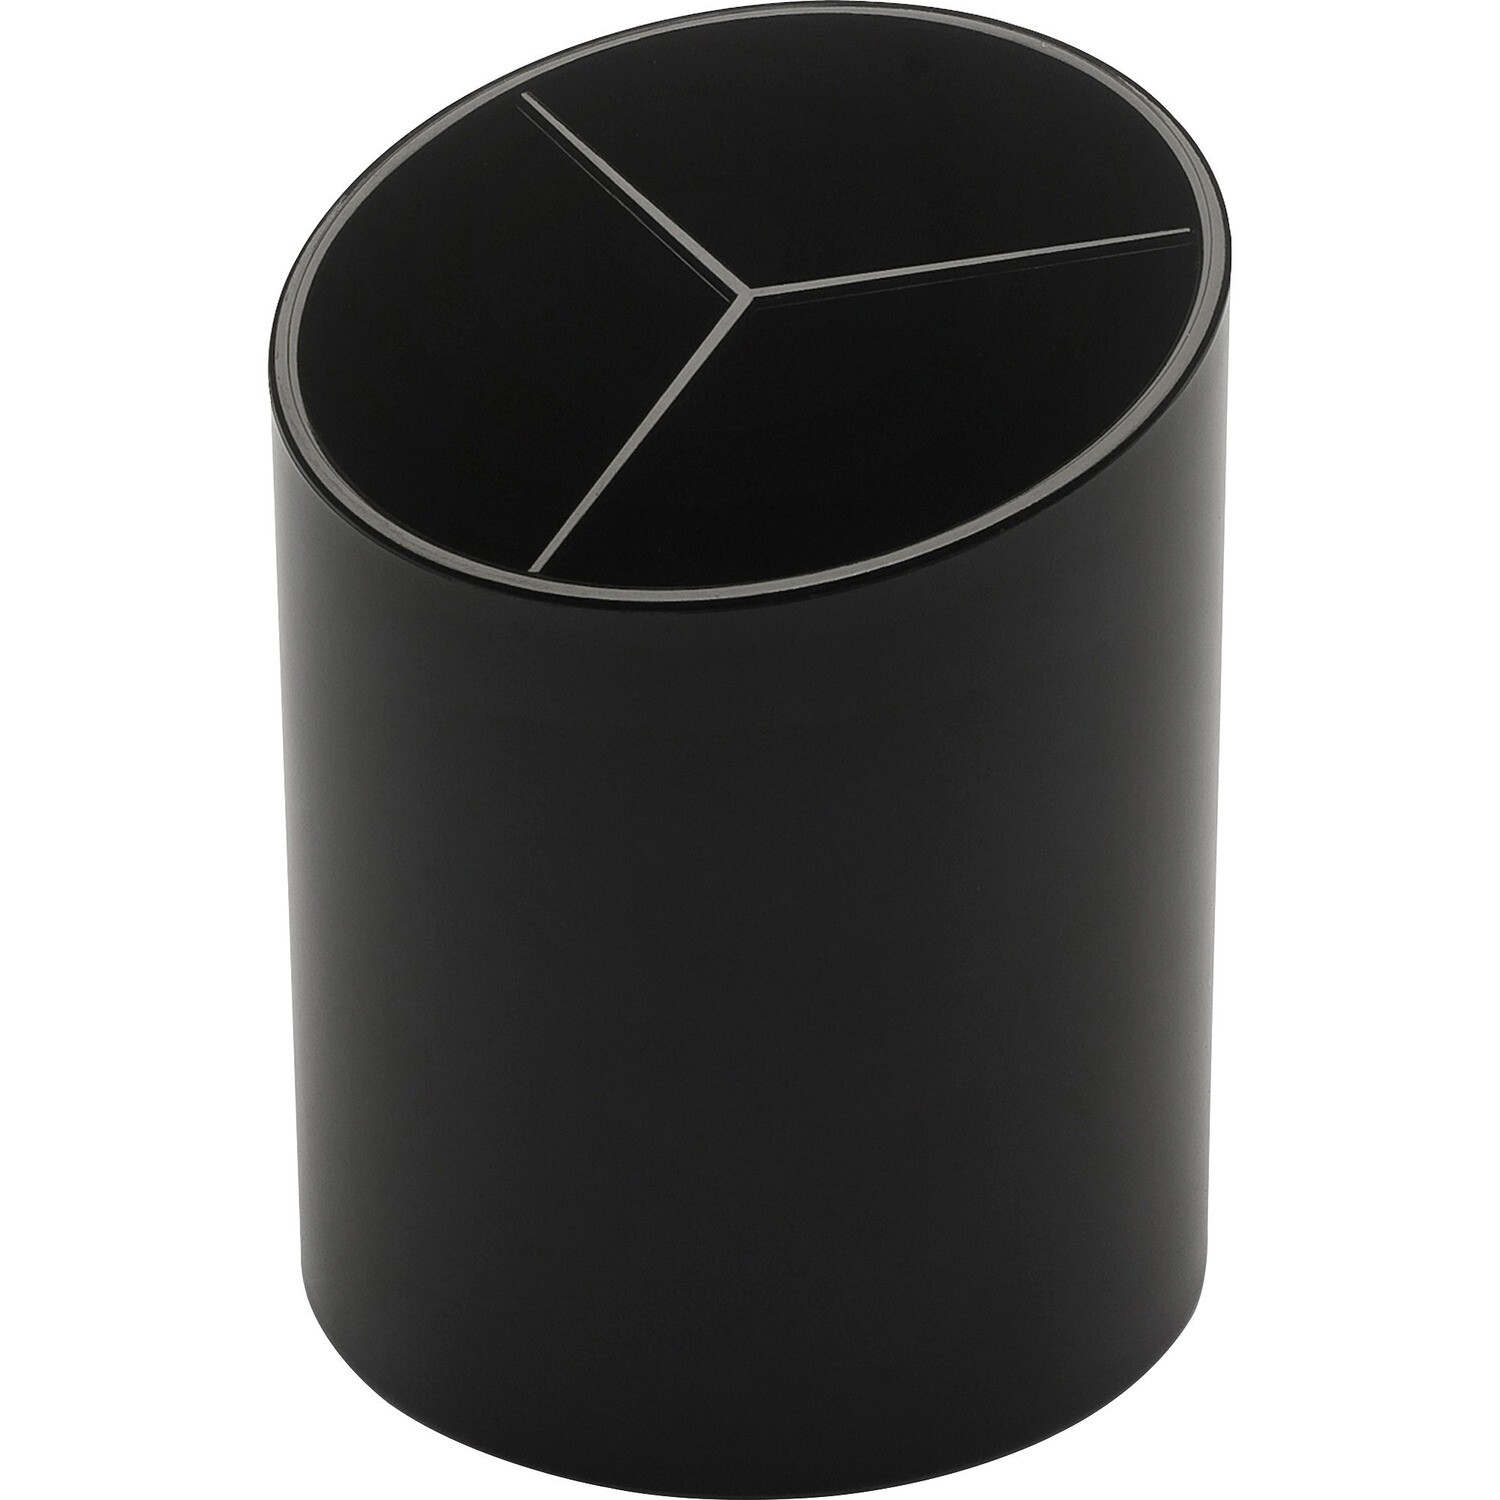 Pencil Cup, 3 Compartment Black, 3 x 3 x 4-1/8 in.